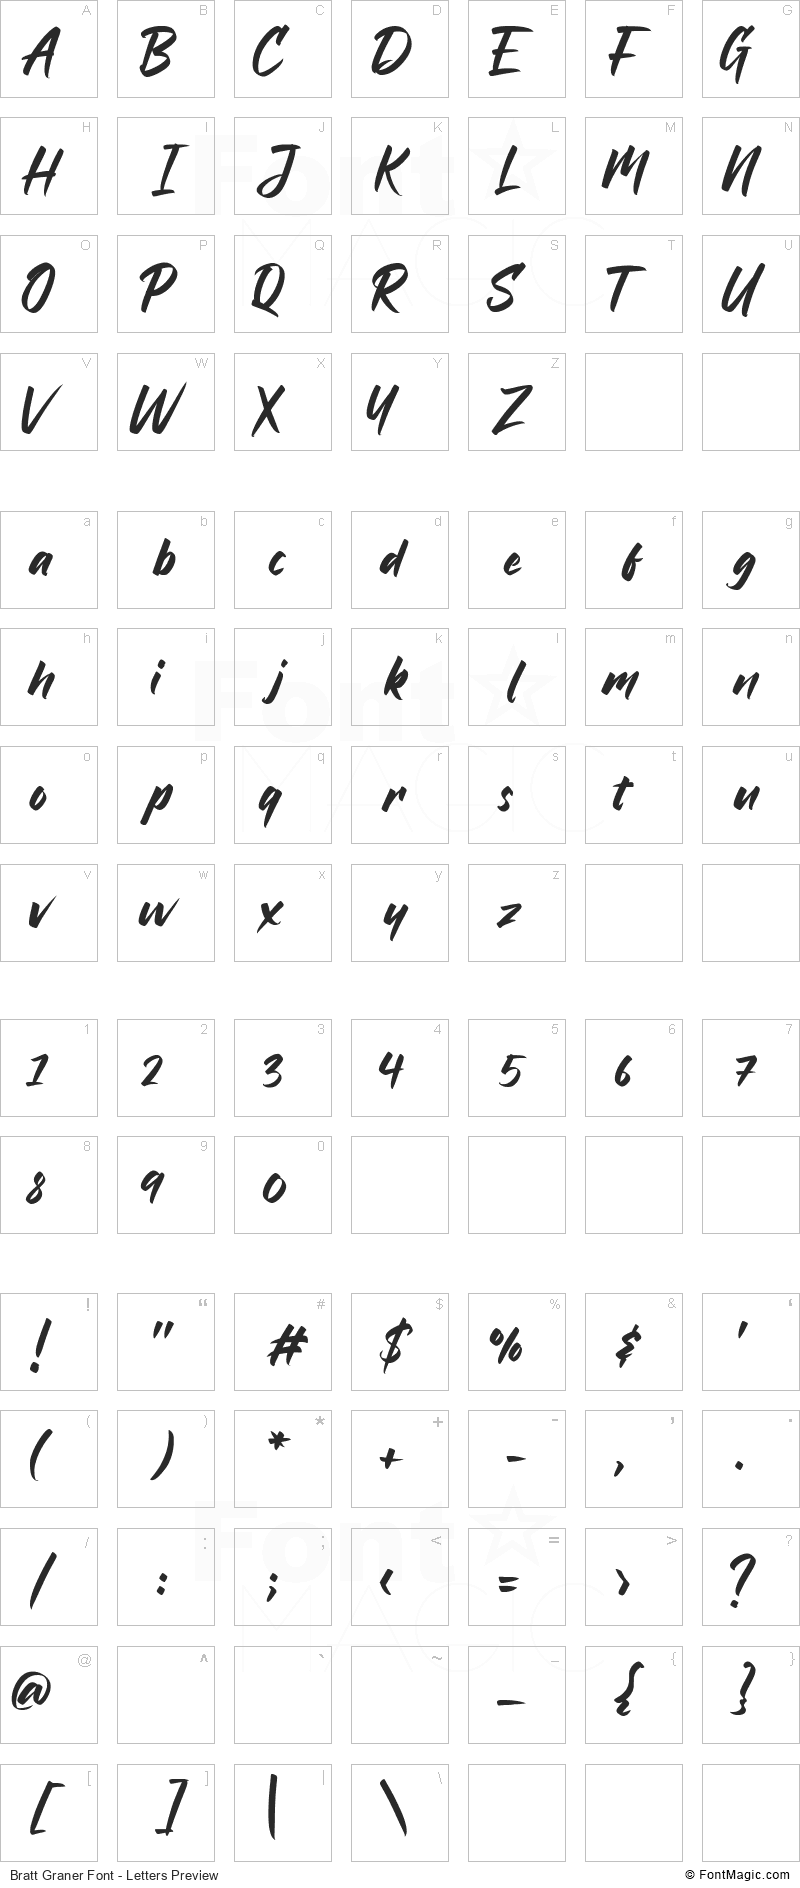 Bratt Graner Font - All Latters Preview Chart